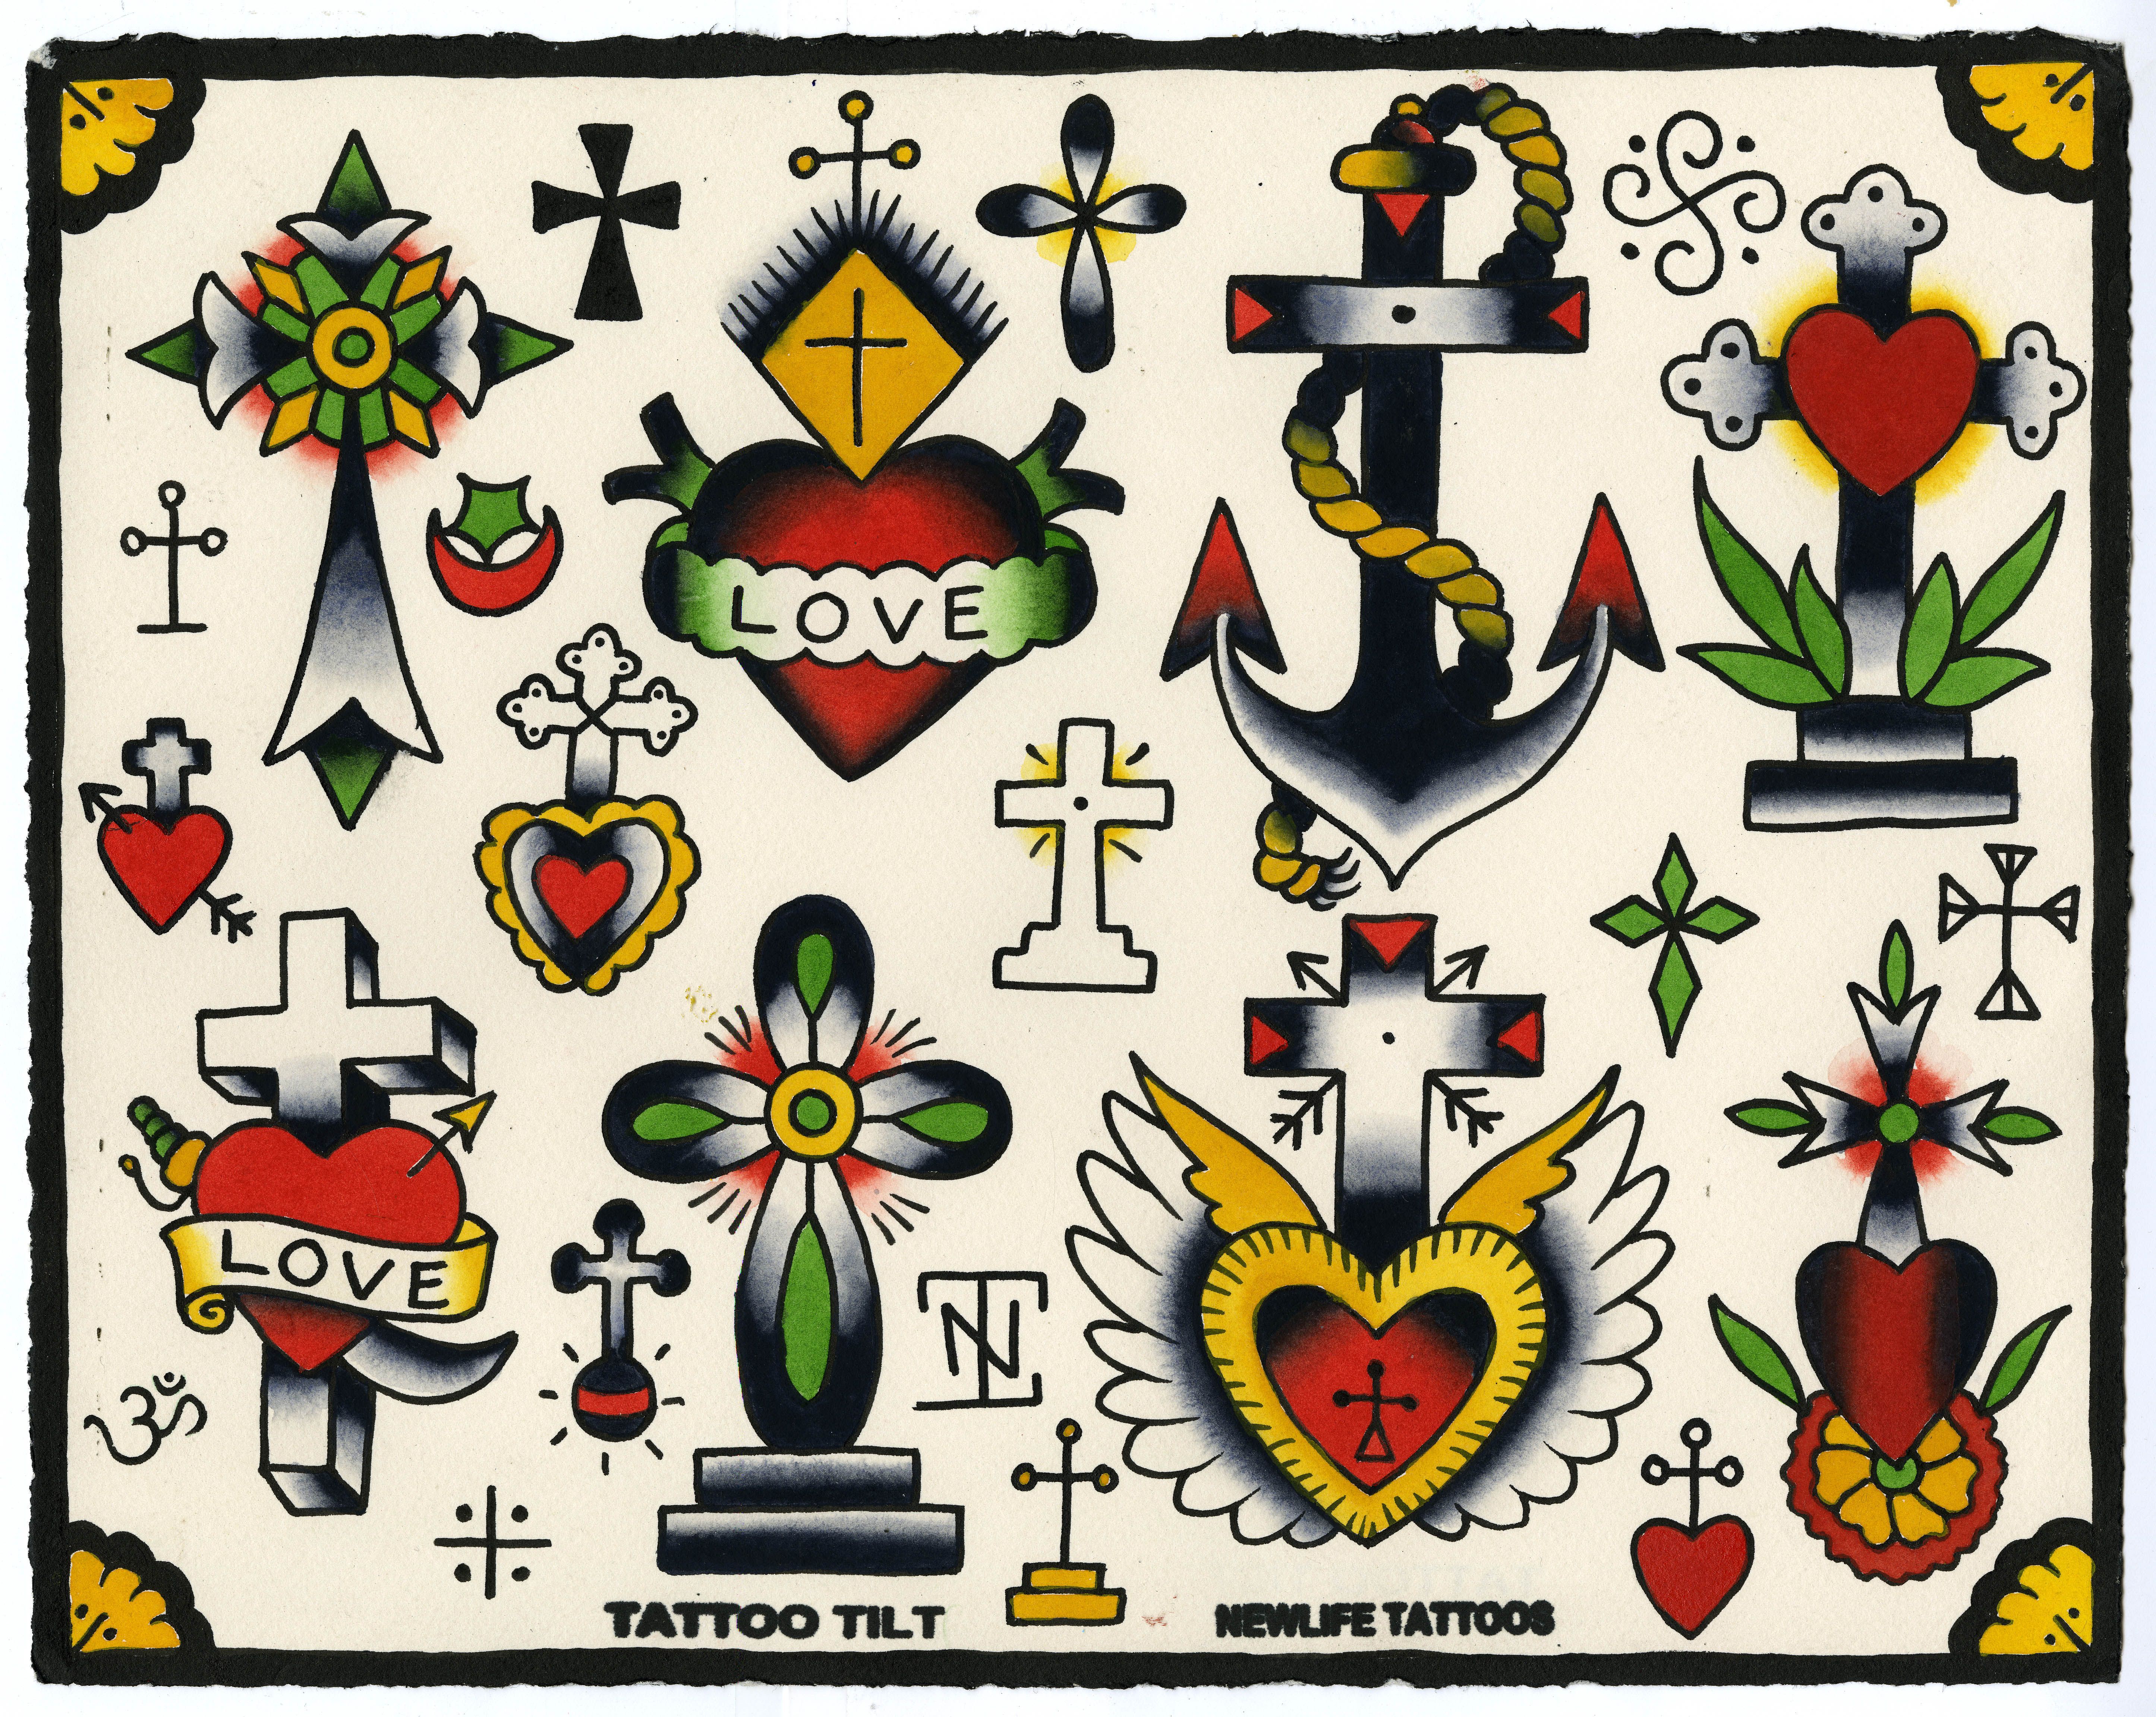 lyle tuttle tattoo flash - Cerca con Google -   19 traditional cross tattoo ideas